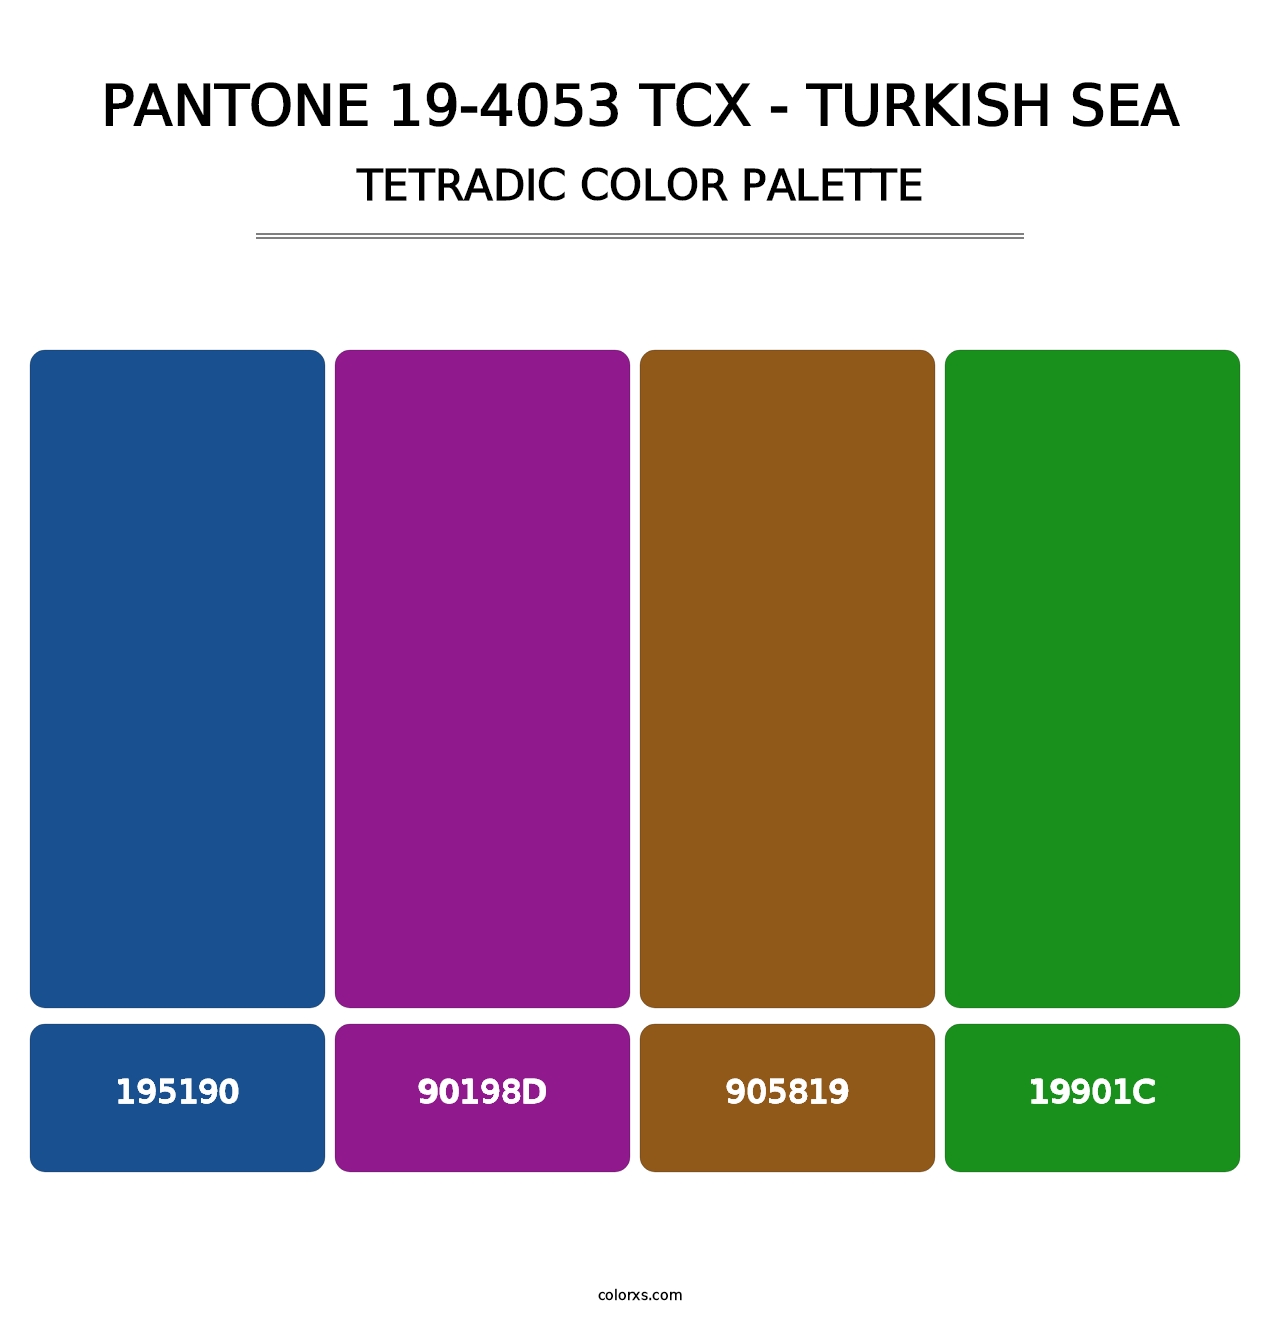 PANTONE 19-4053 TCX - Turkish Sea - Tetradic Color Palette